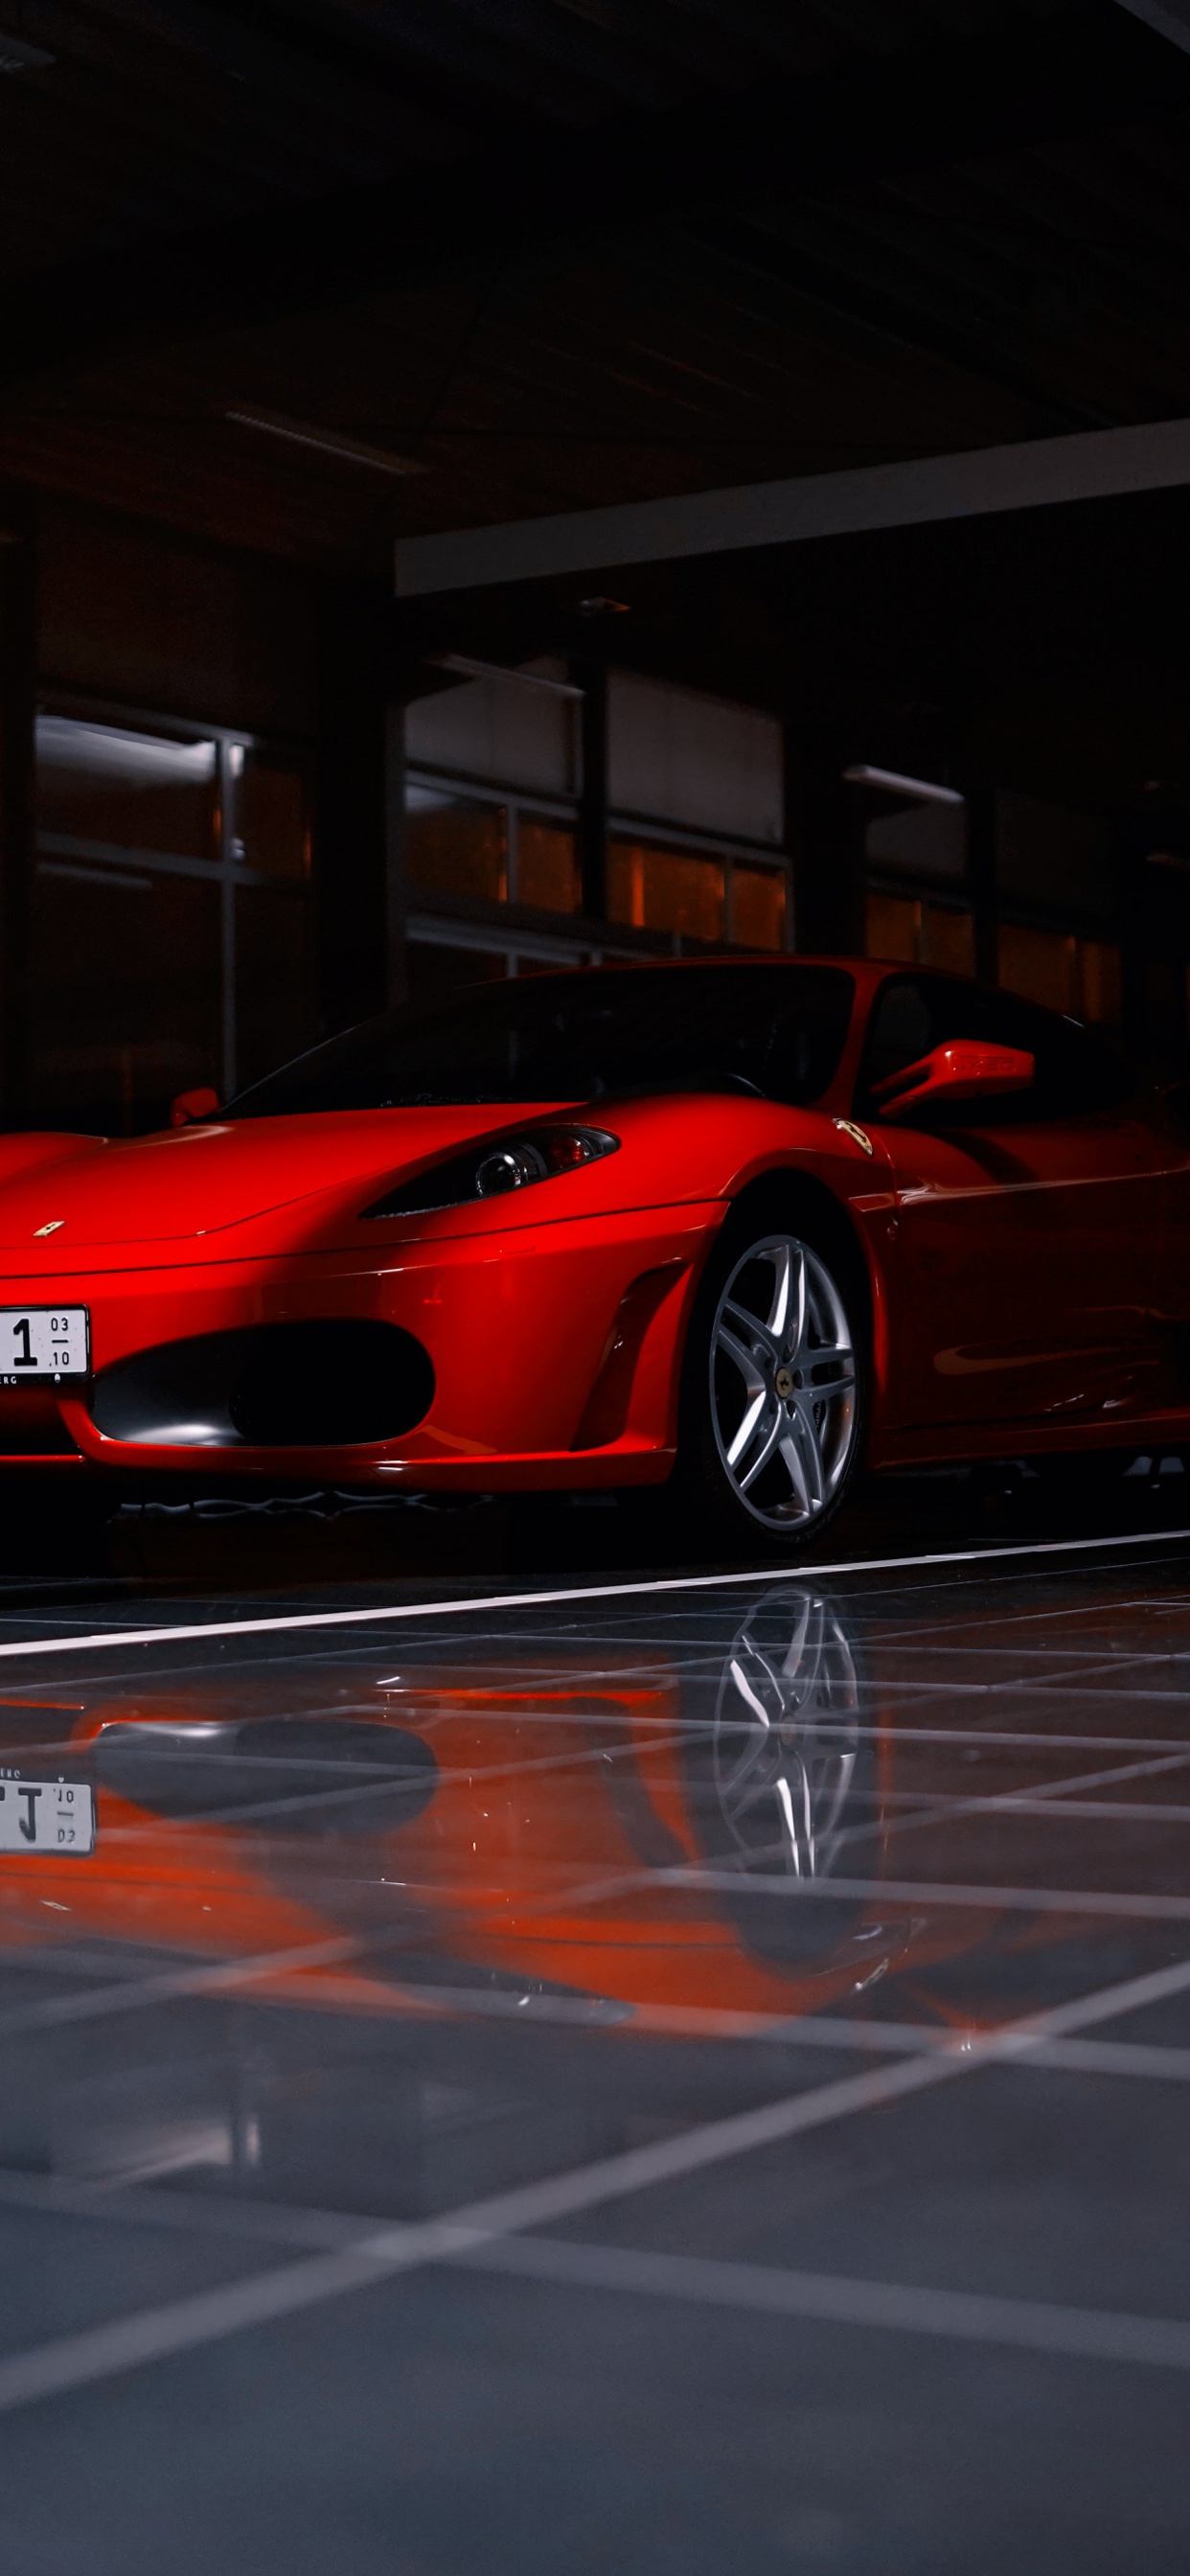 Ferrari Rouge 458 Italia Garée Sur Parking. Wallpaper in 1242x2688 Resolution